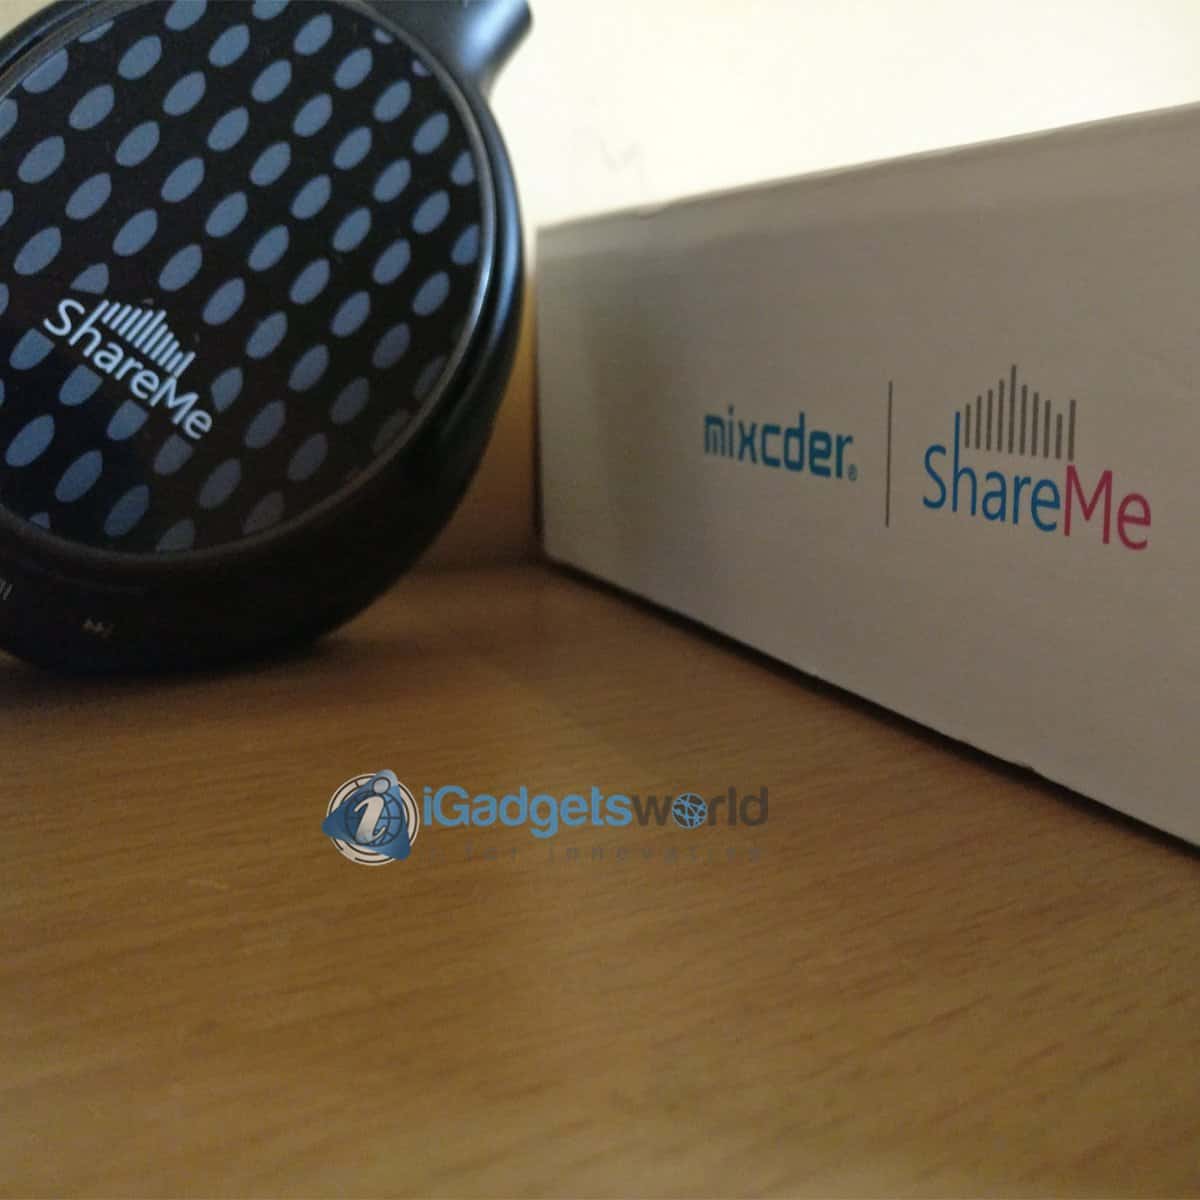 Mixcder ShareMe ProBluetooth headphone Review